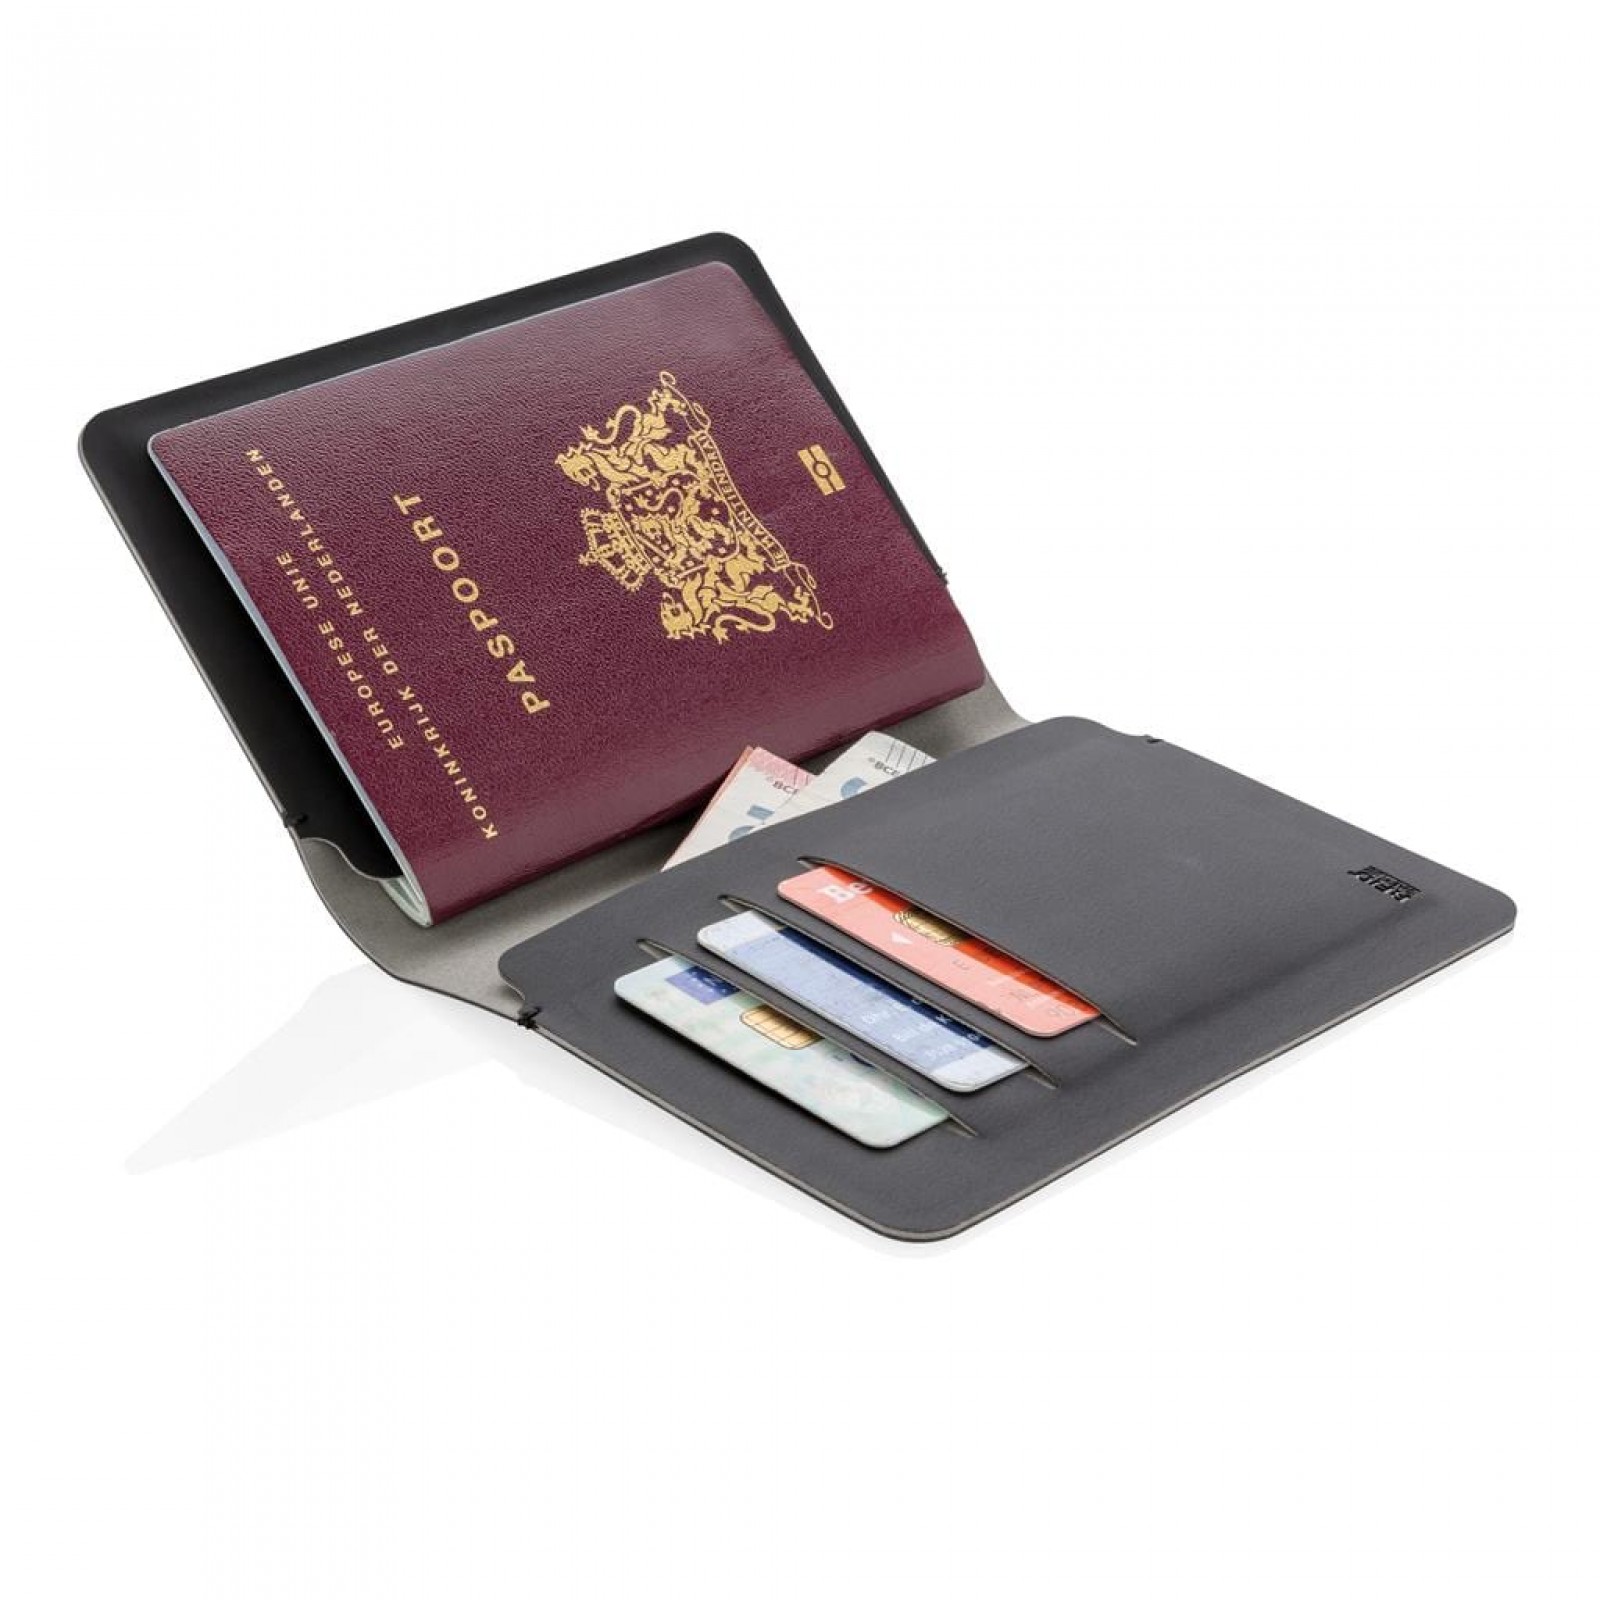 Deziliao Passport Holder,Passport Holder Card Slots